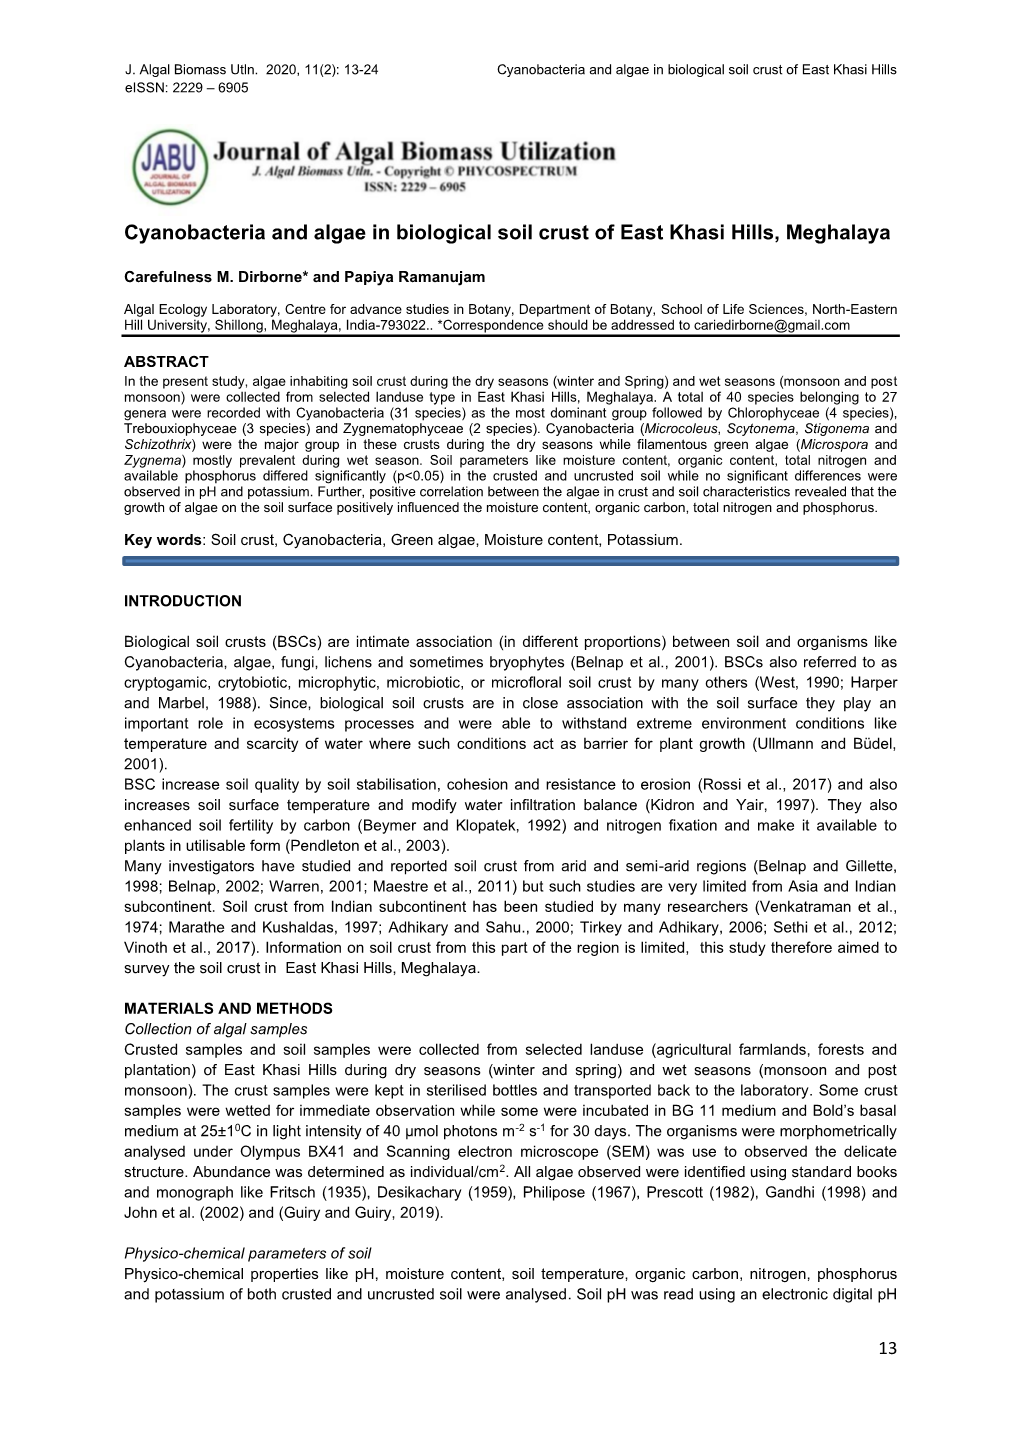 Cyanobacteria and Algae in Biological Soil Crust of East Khasi Hills Eissn: 2229 – 6905